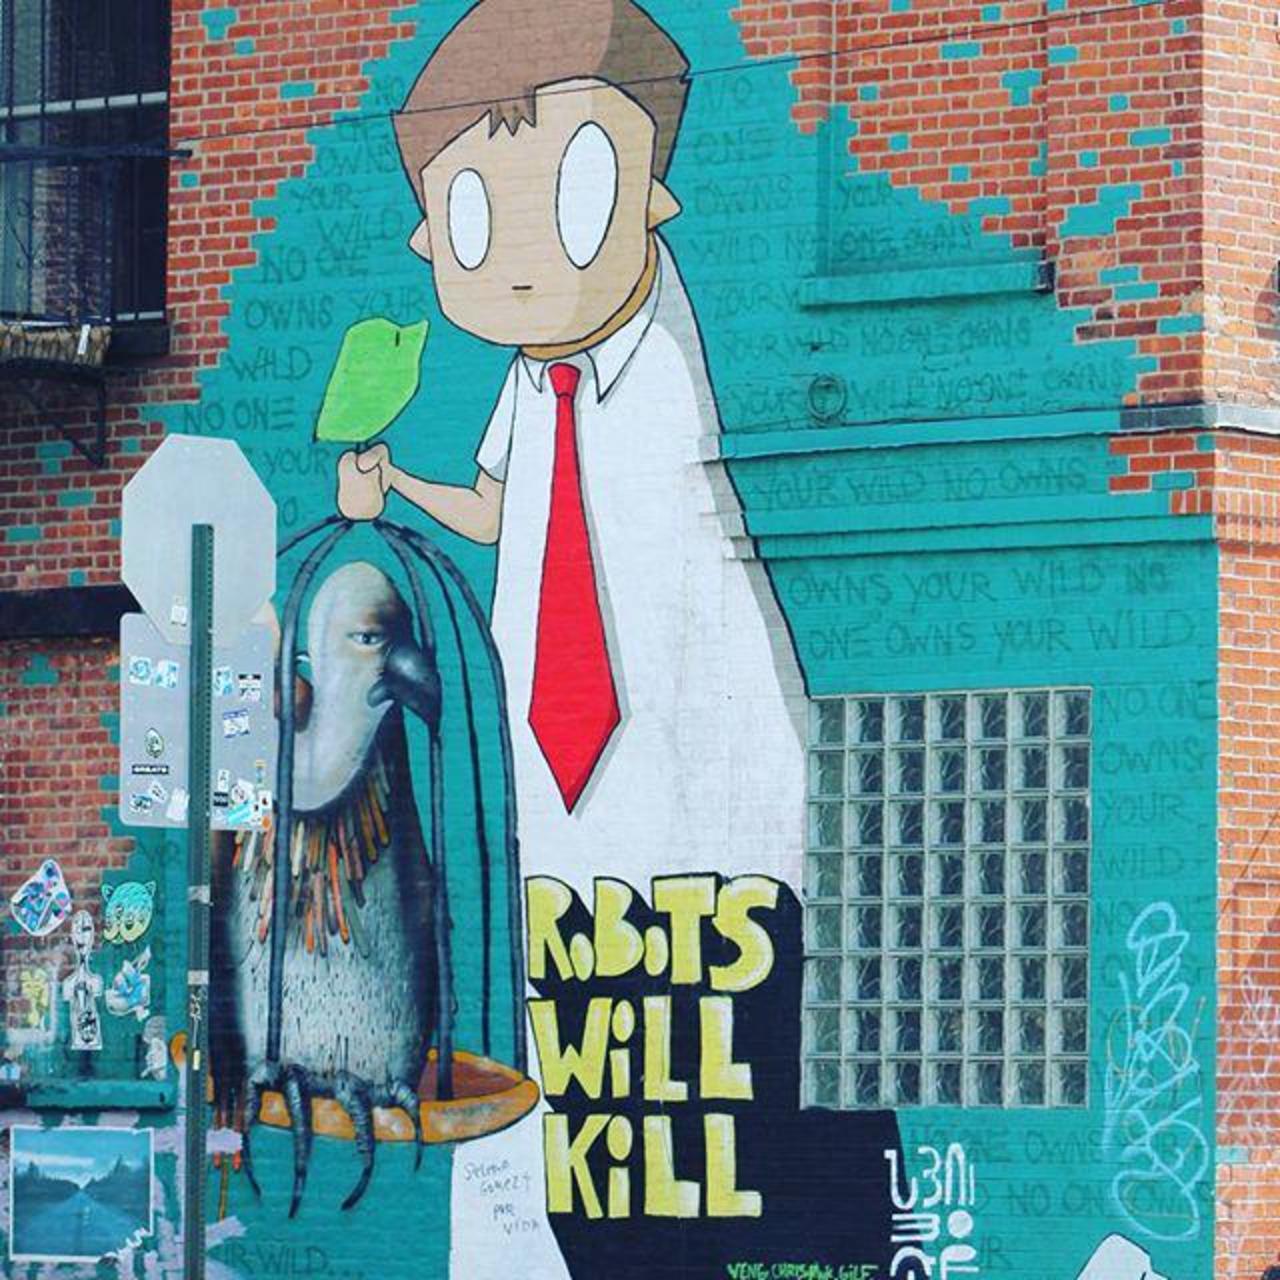 #streetarteverywhere #streetartnyc #newyork #wall  #muro #graffiti #mural #wallpainting #nyc #newyork #newyorkcity … http://t.co/AMKPsyuEDR